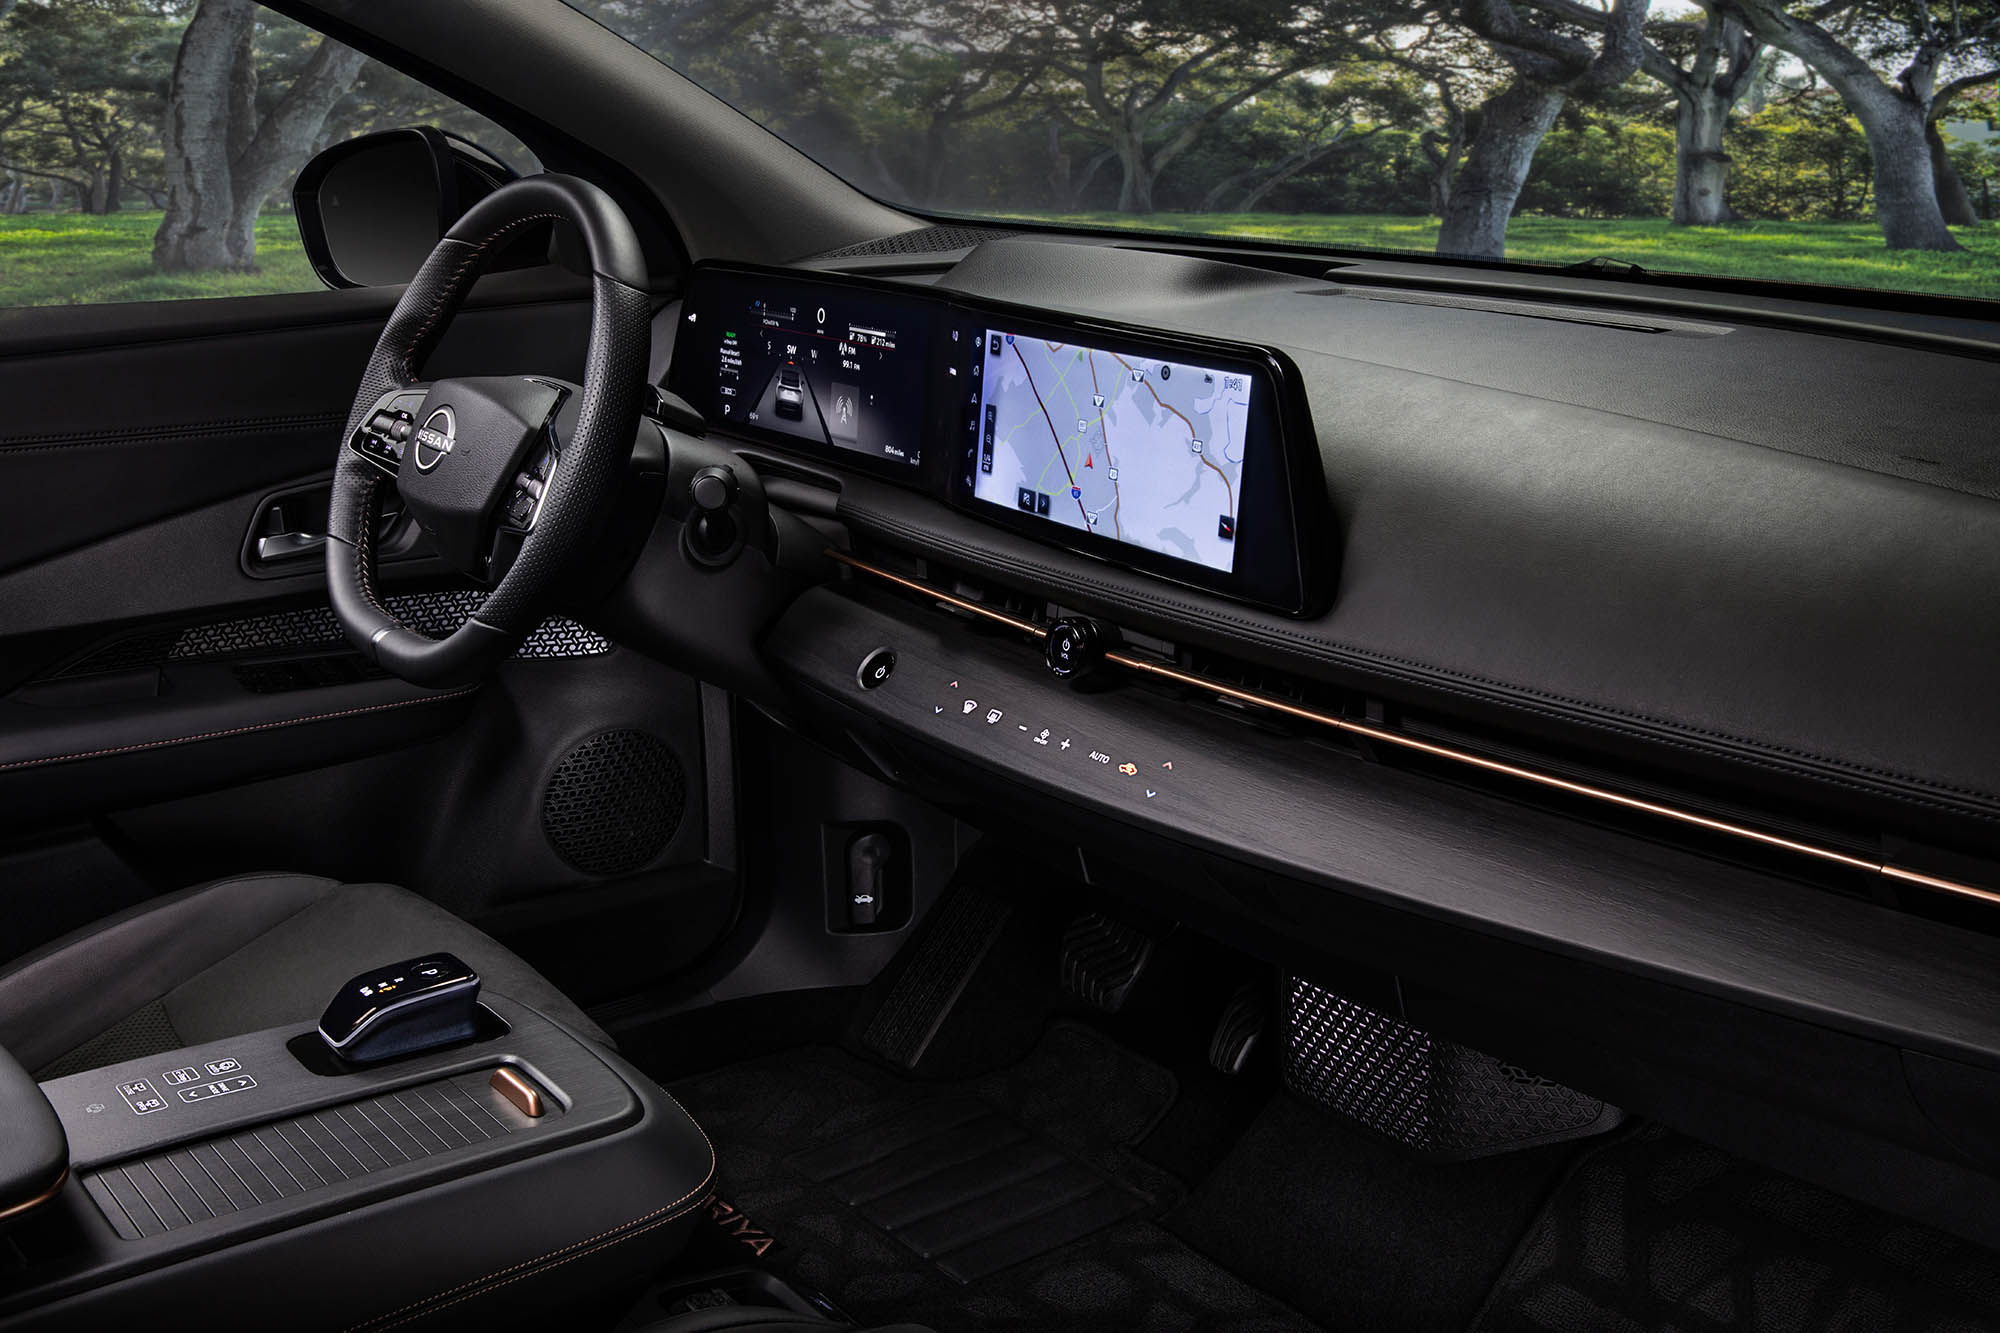 Nissan Ariya electric vehicle interior and steering wheel.